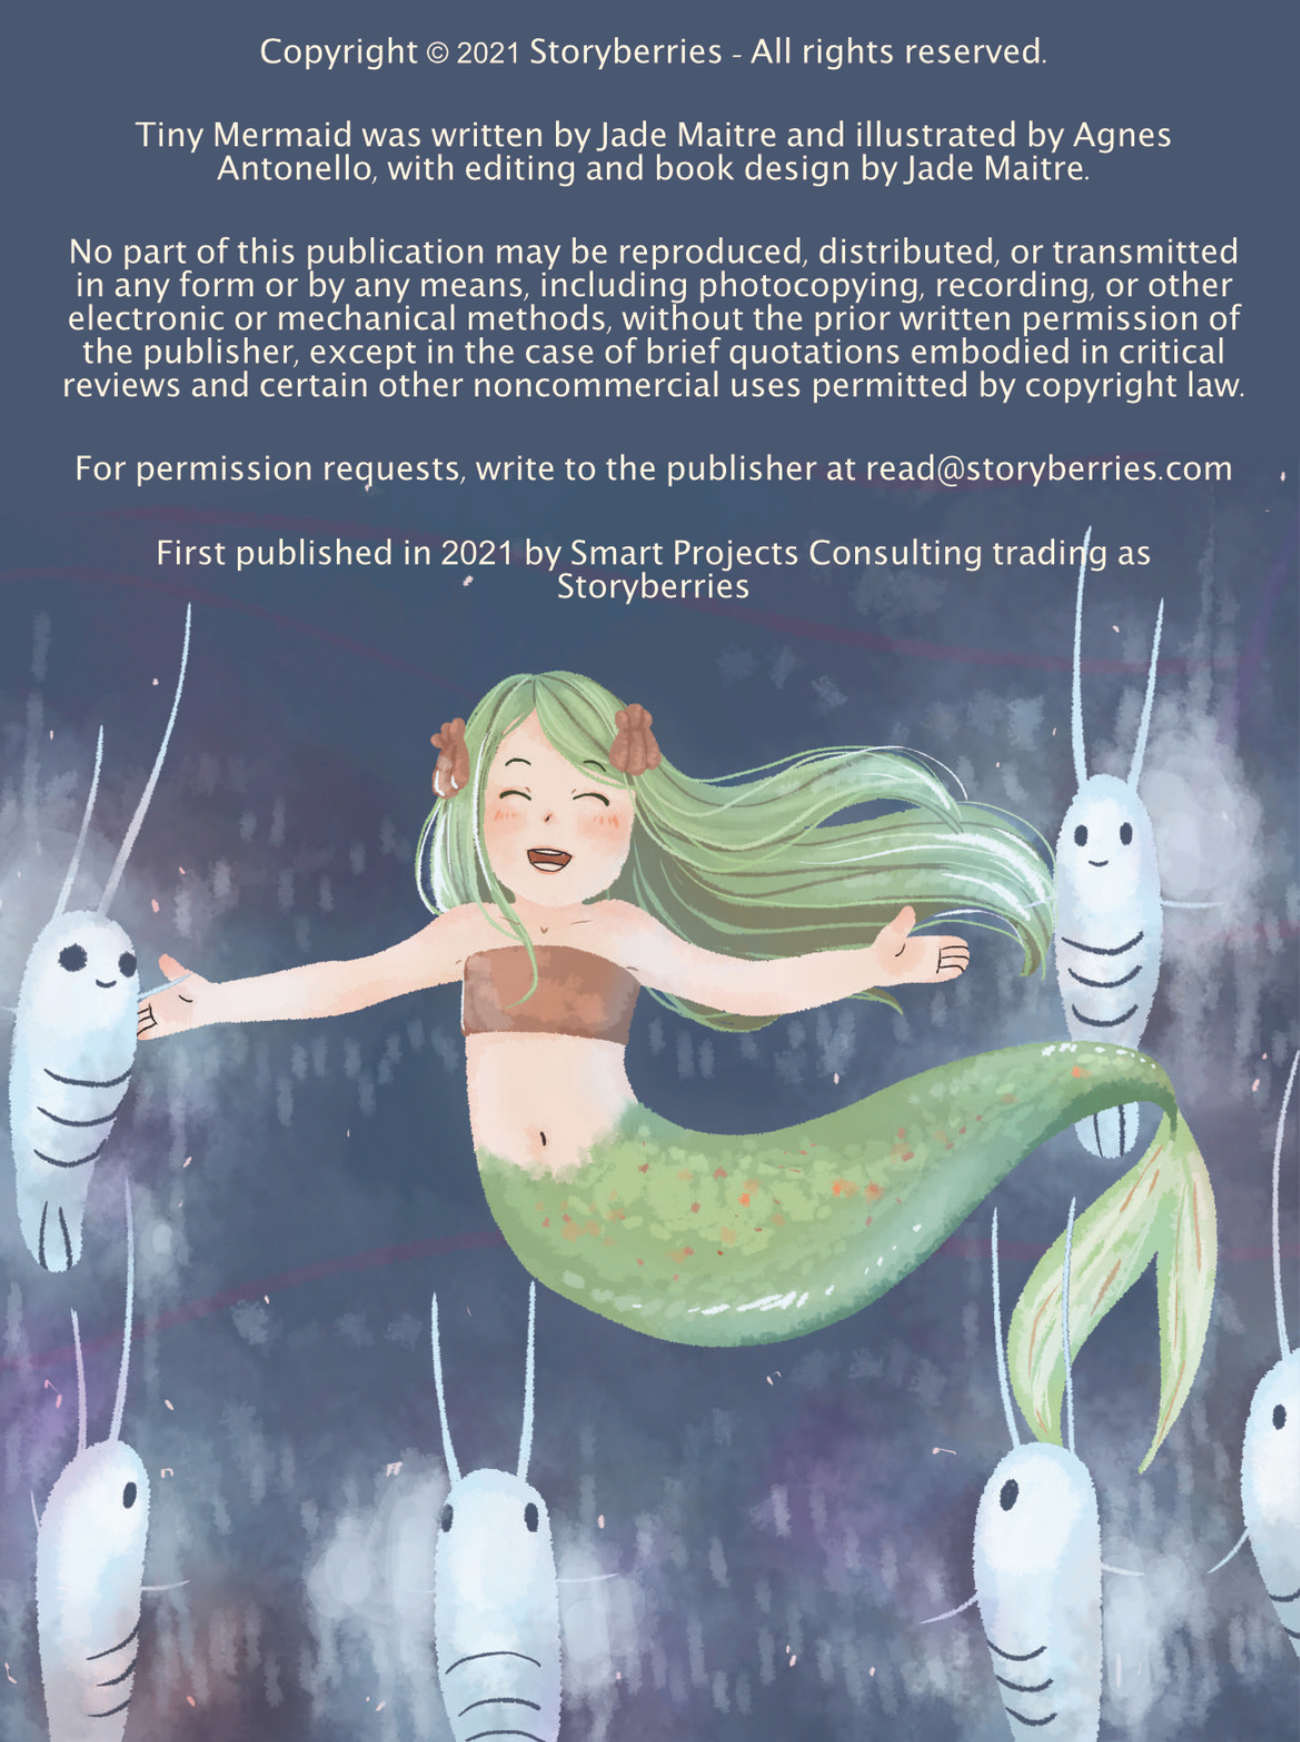 Tiny Mermaid (c) Storyberries 2021 copyright and credits